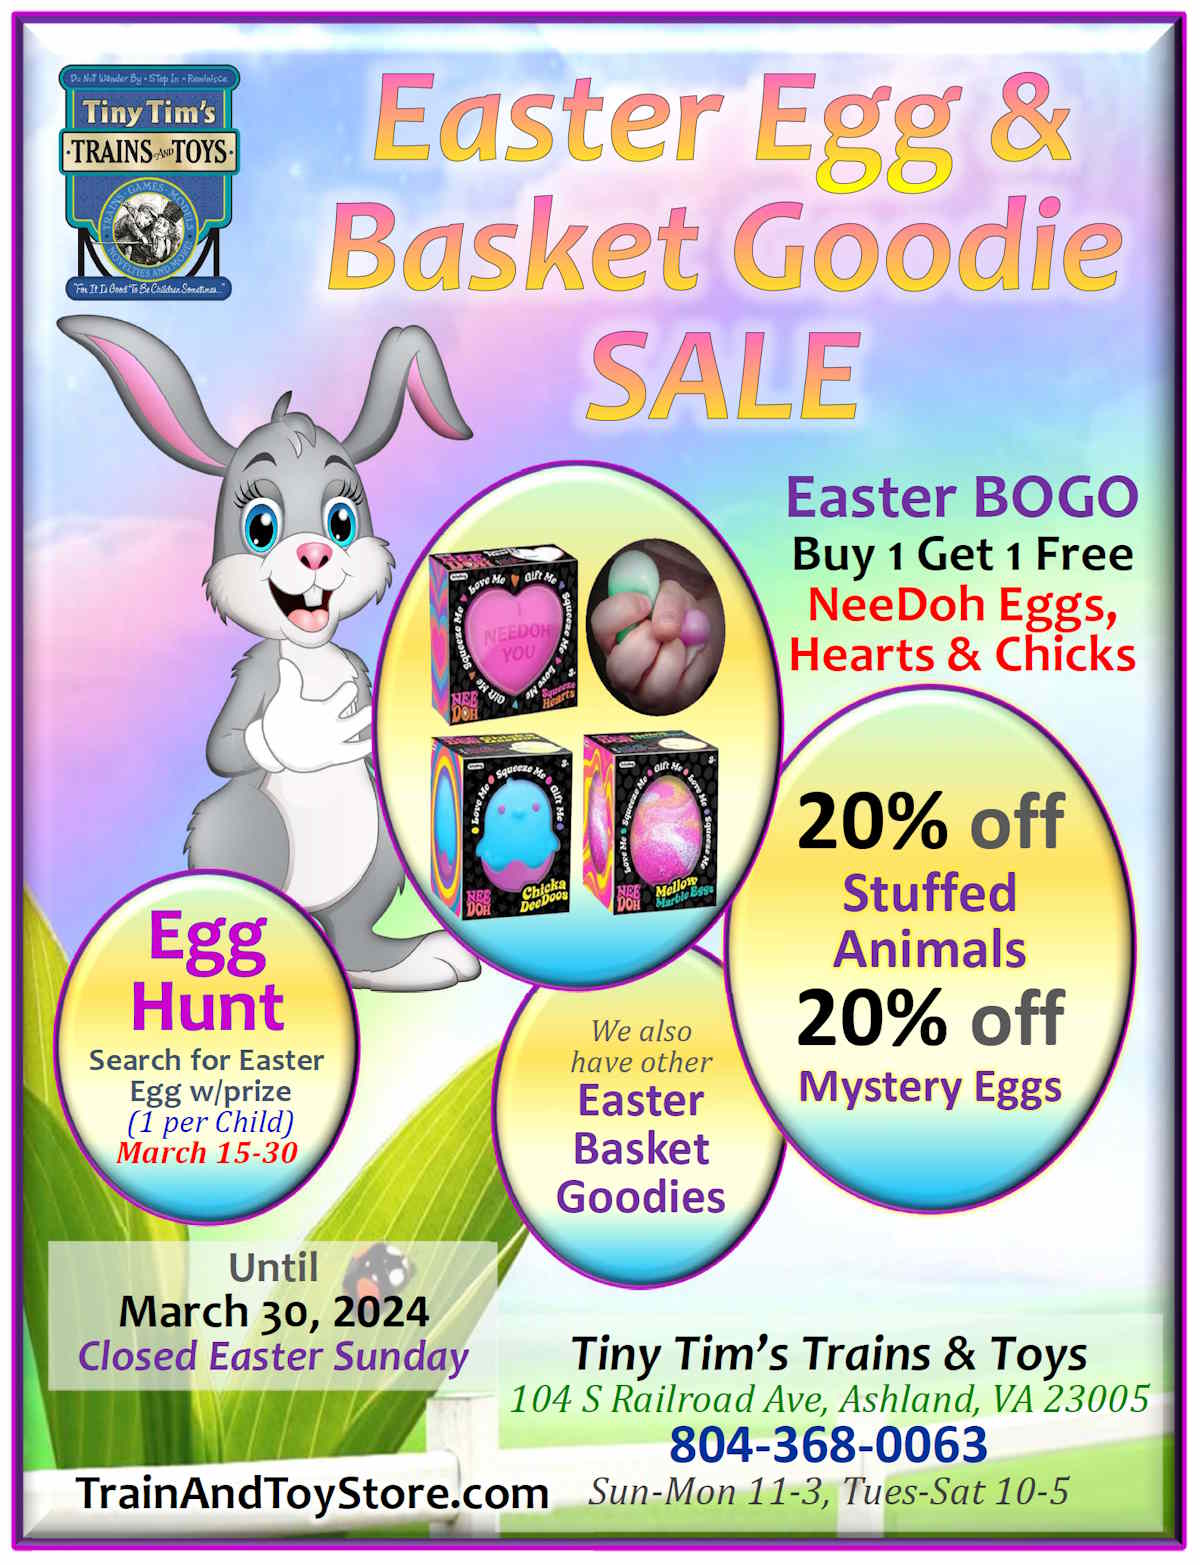 Egg & Basket Goodie Sale